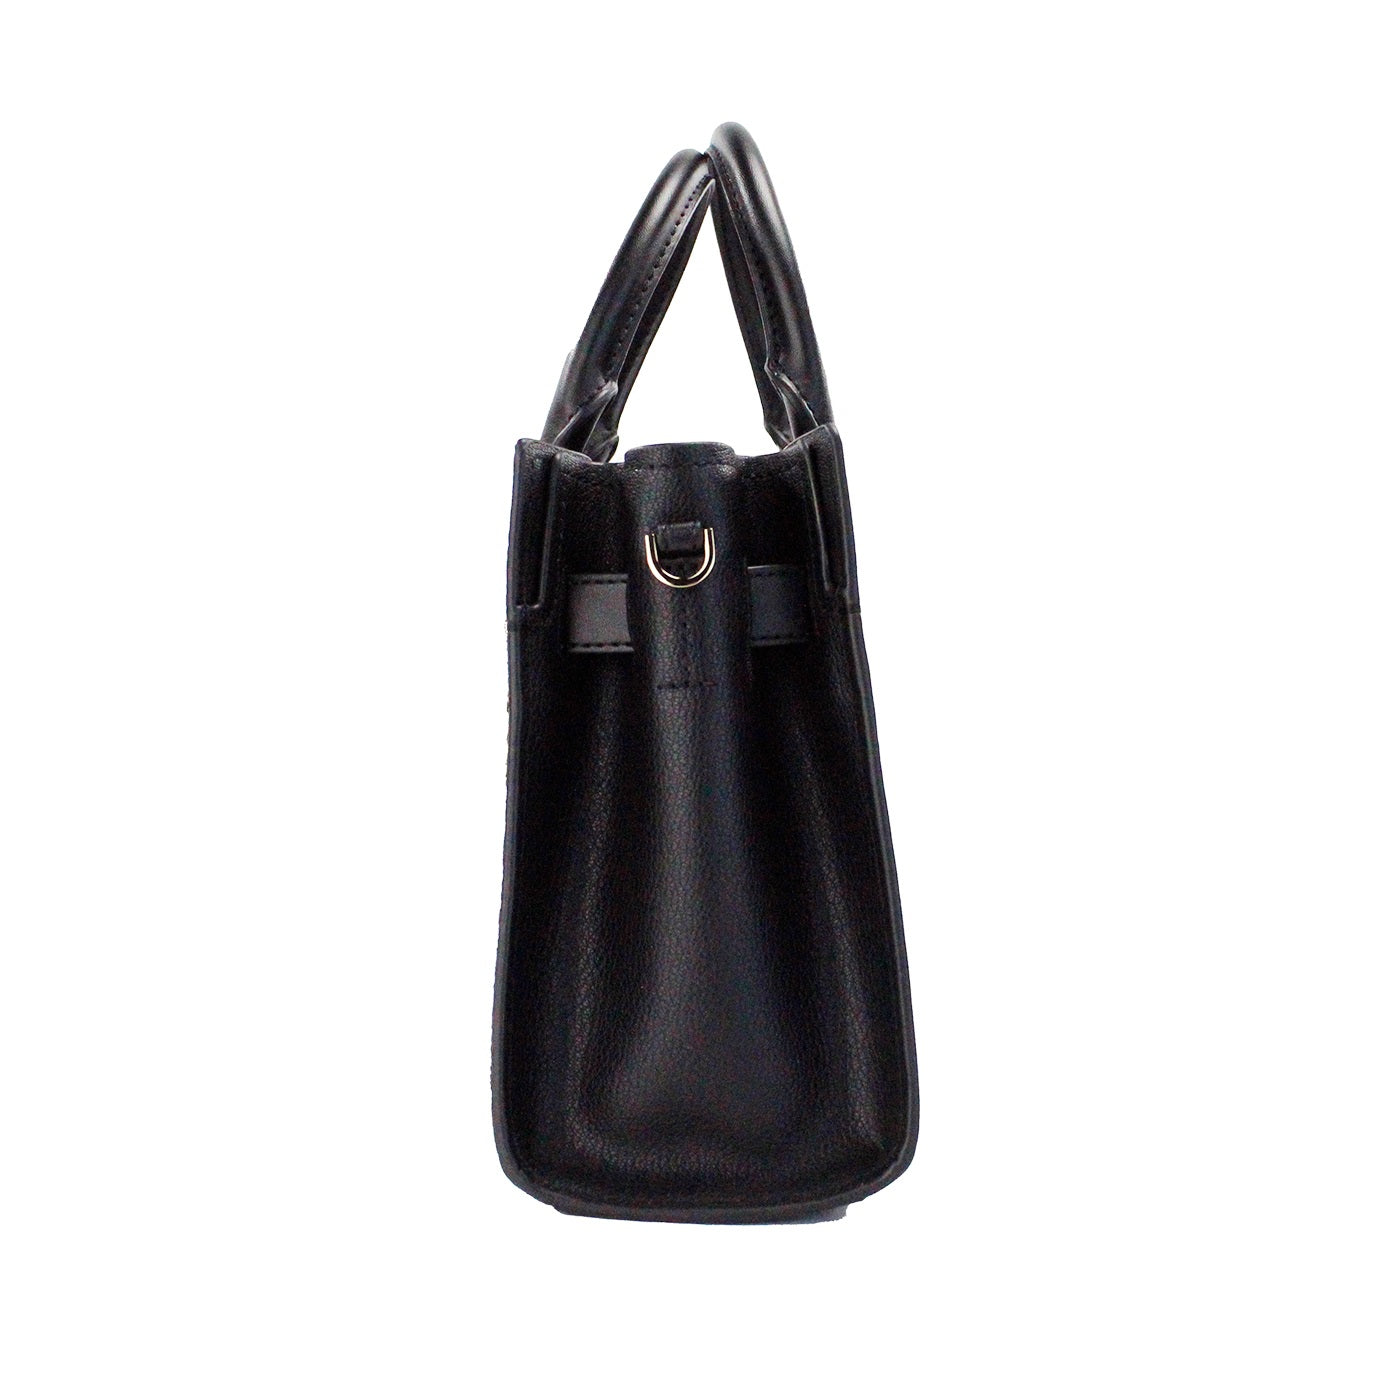 Hamilton Small Black Haircalf Leather Satchel Crossbody Bag - Divitiae Glamour